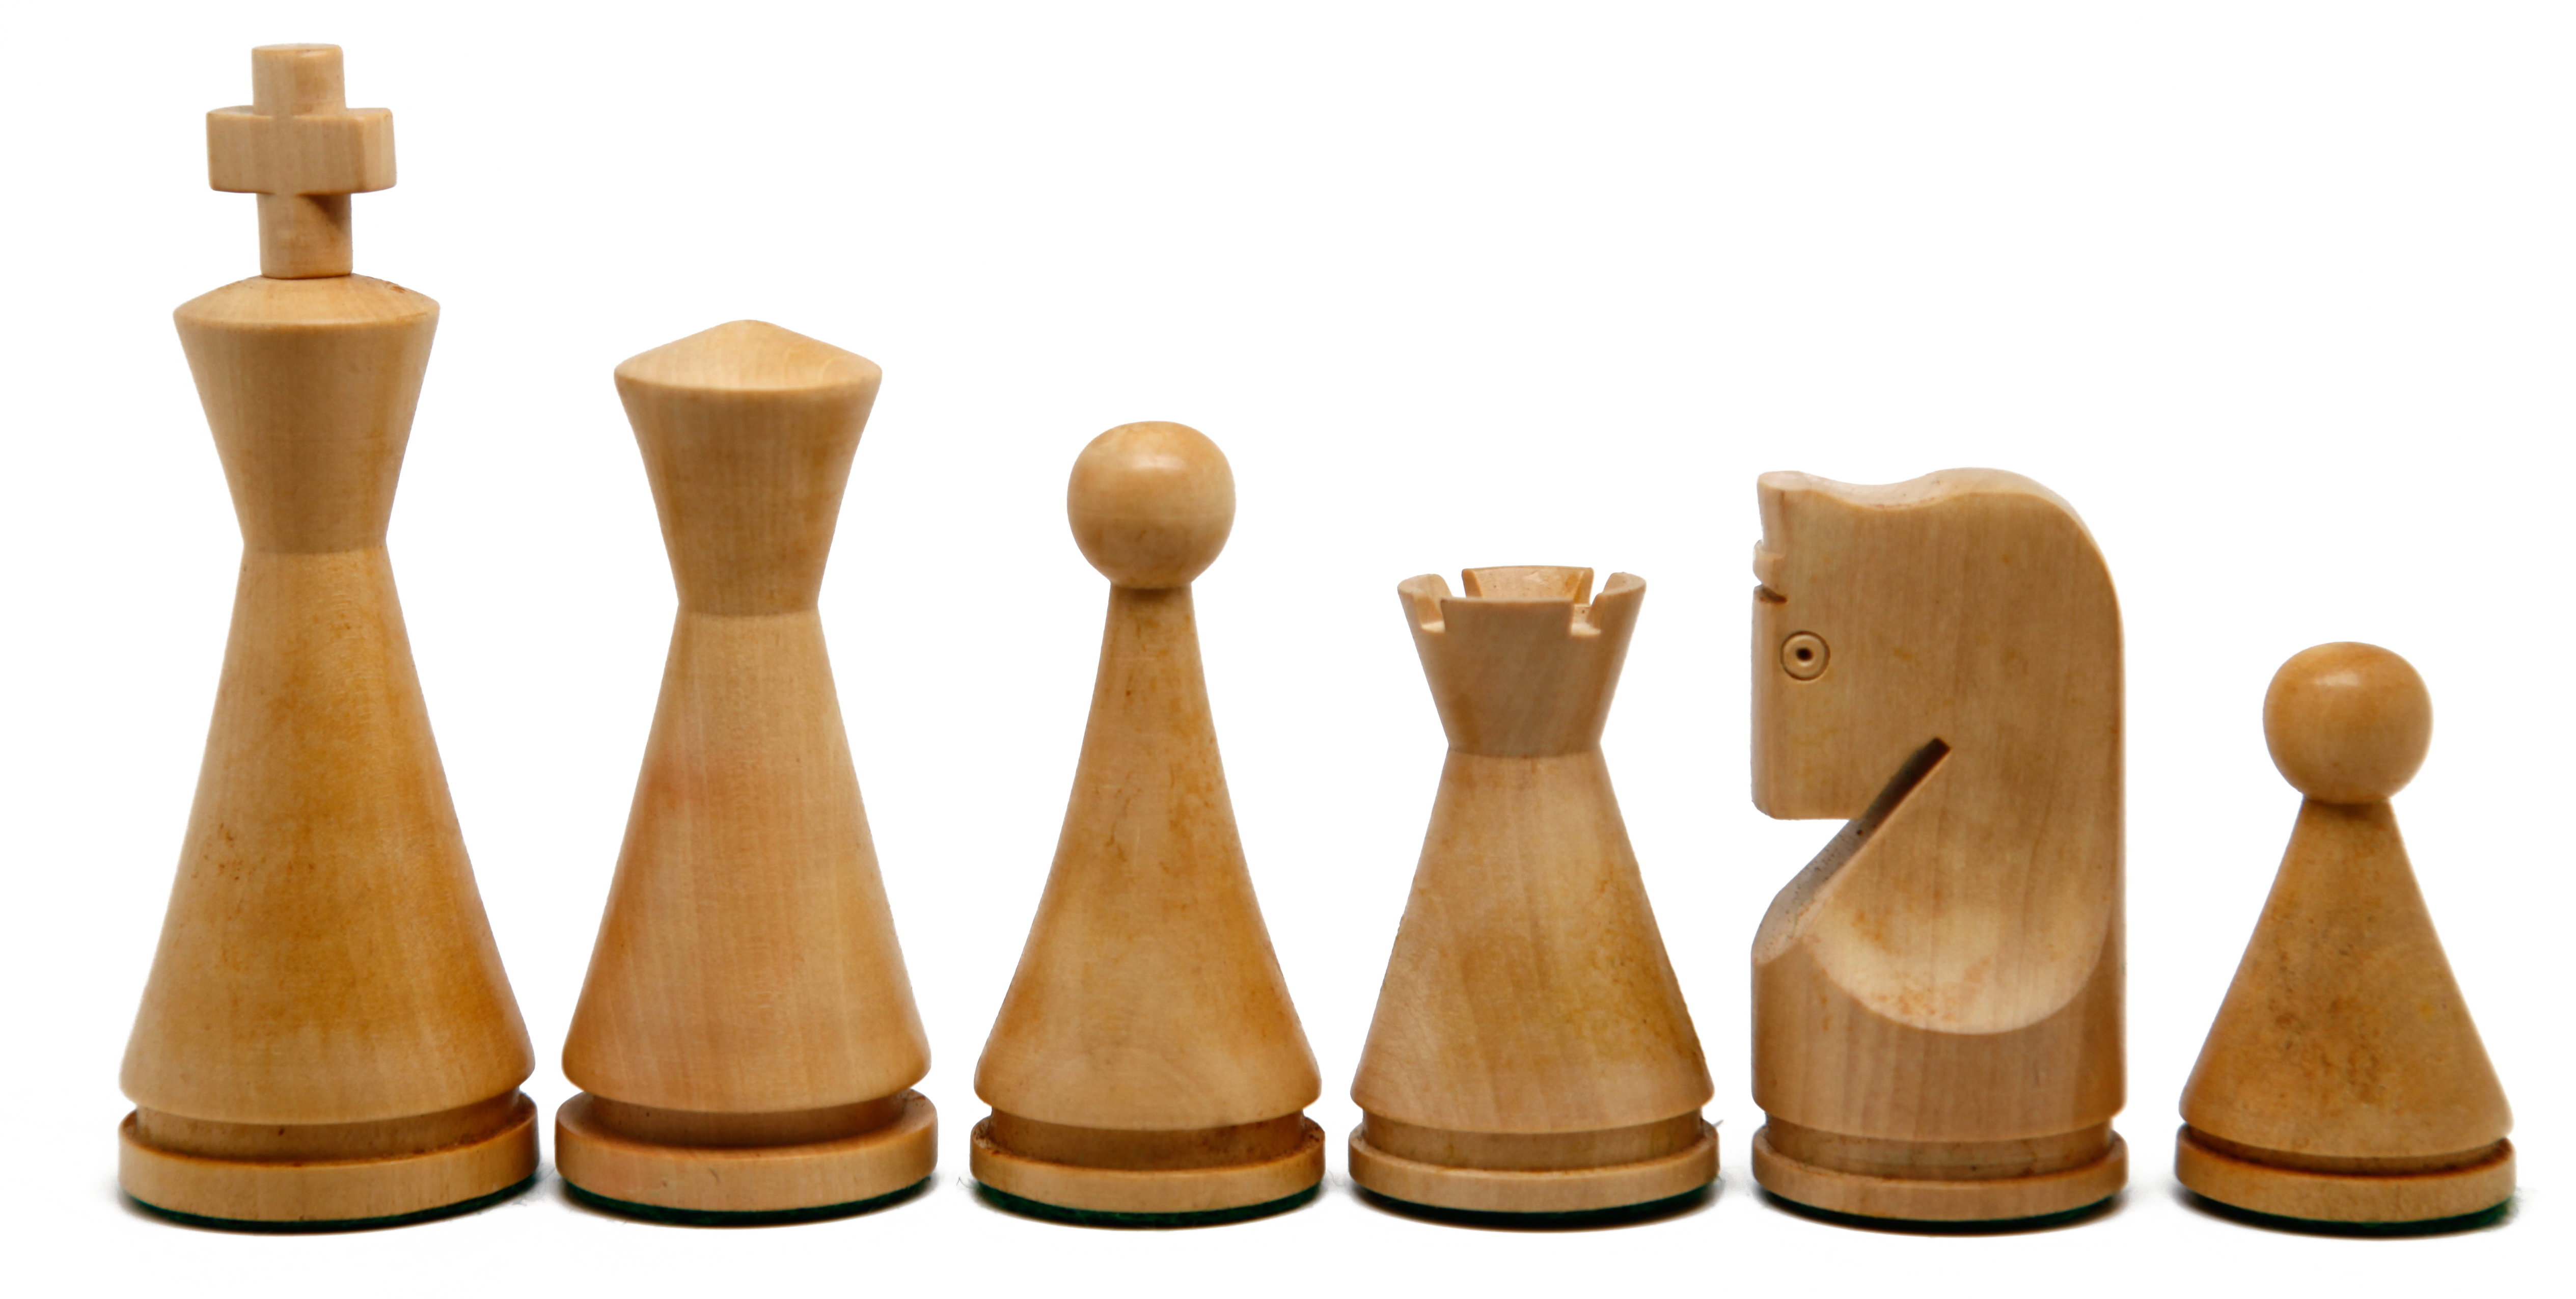 VI/ Piezas de ajedrez modelo Cone modernas "3.75" Ebanizado.